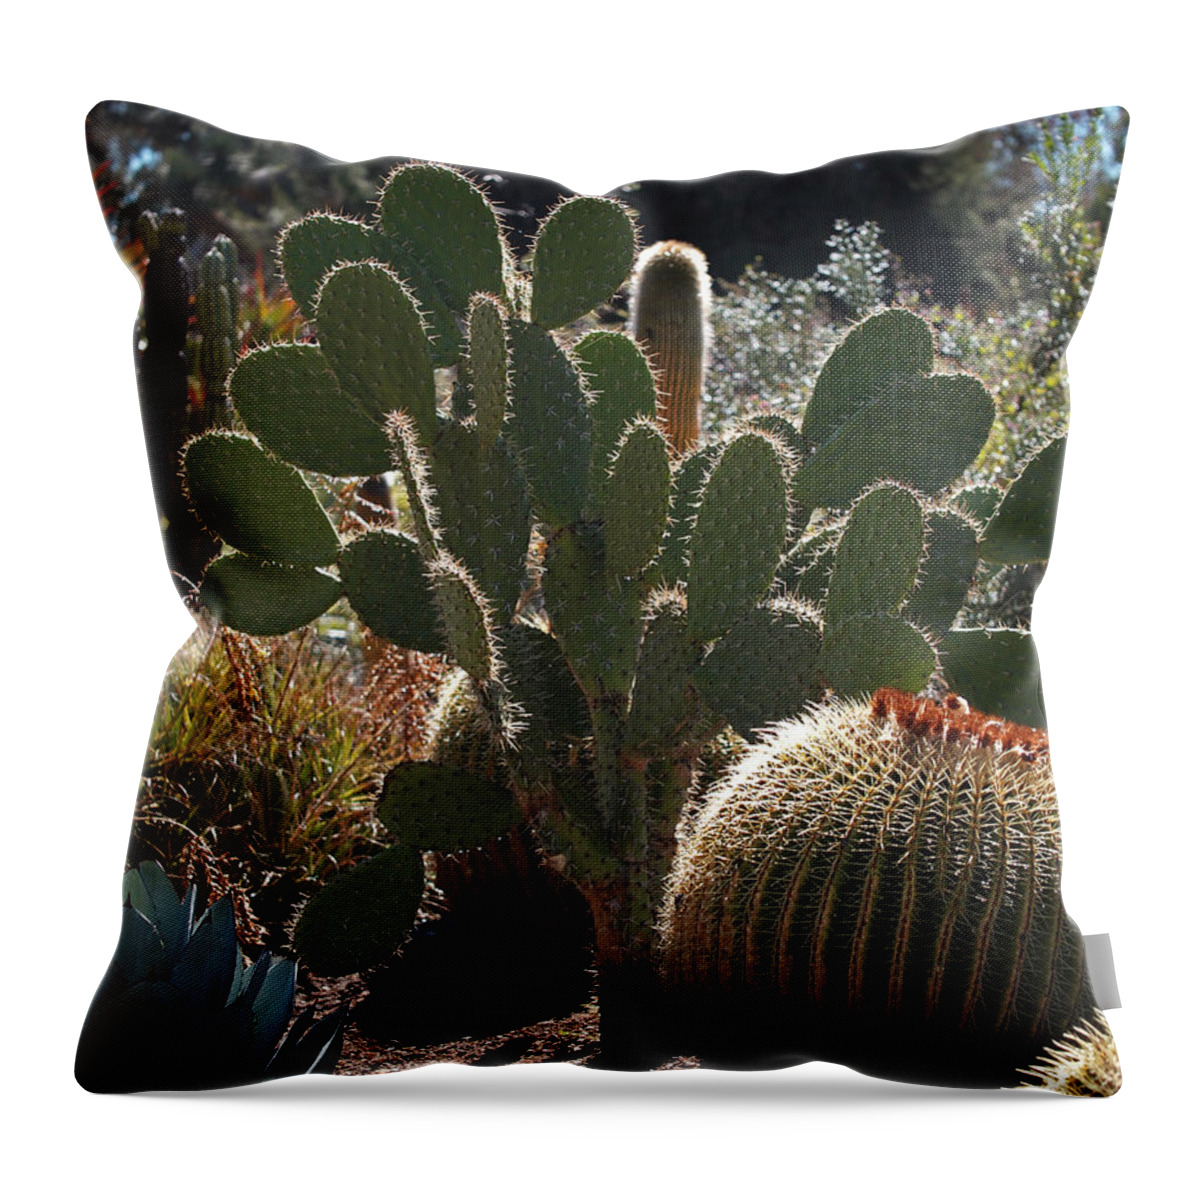 Desert Garden Throw Pillow featuring the photograph The Huntington Desert Garden by Rona Black